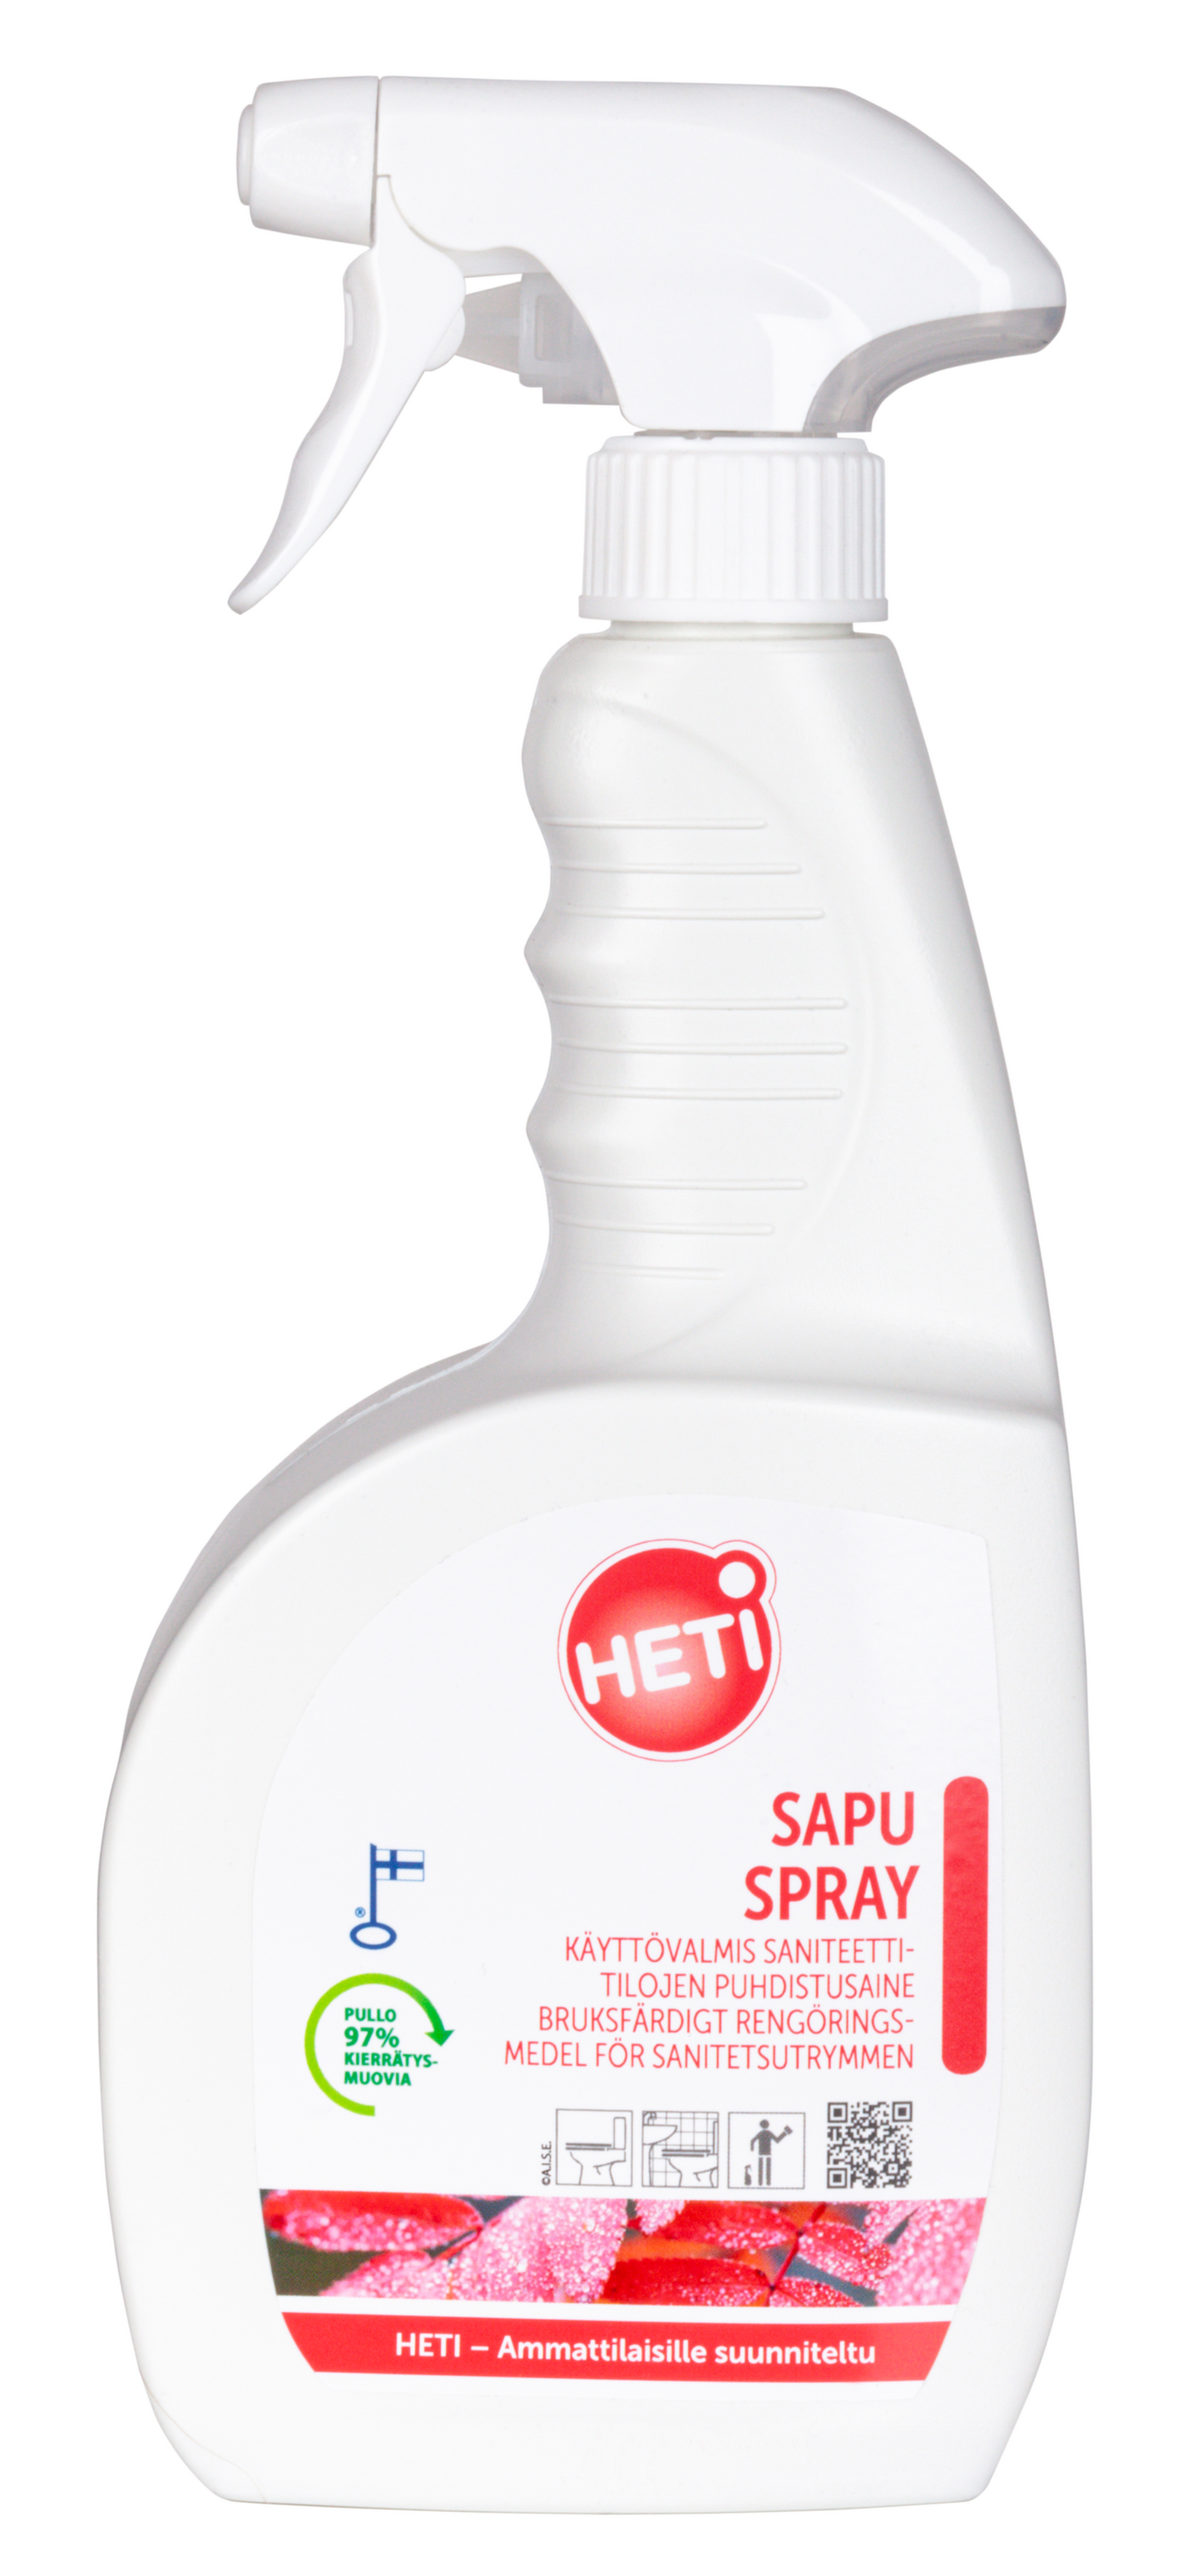 Heti Sapu Spray käyttövalmis saniteettitilojen puhdistusaine 750ml